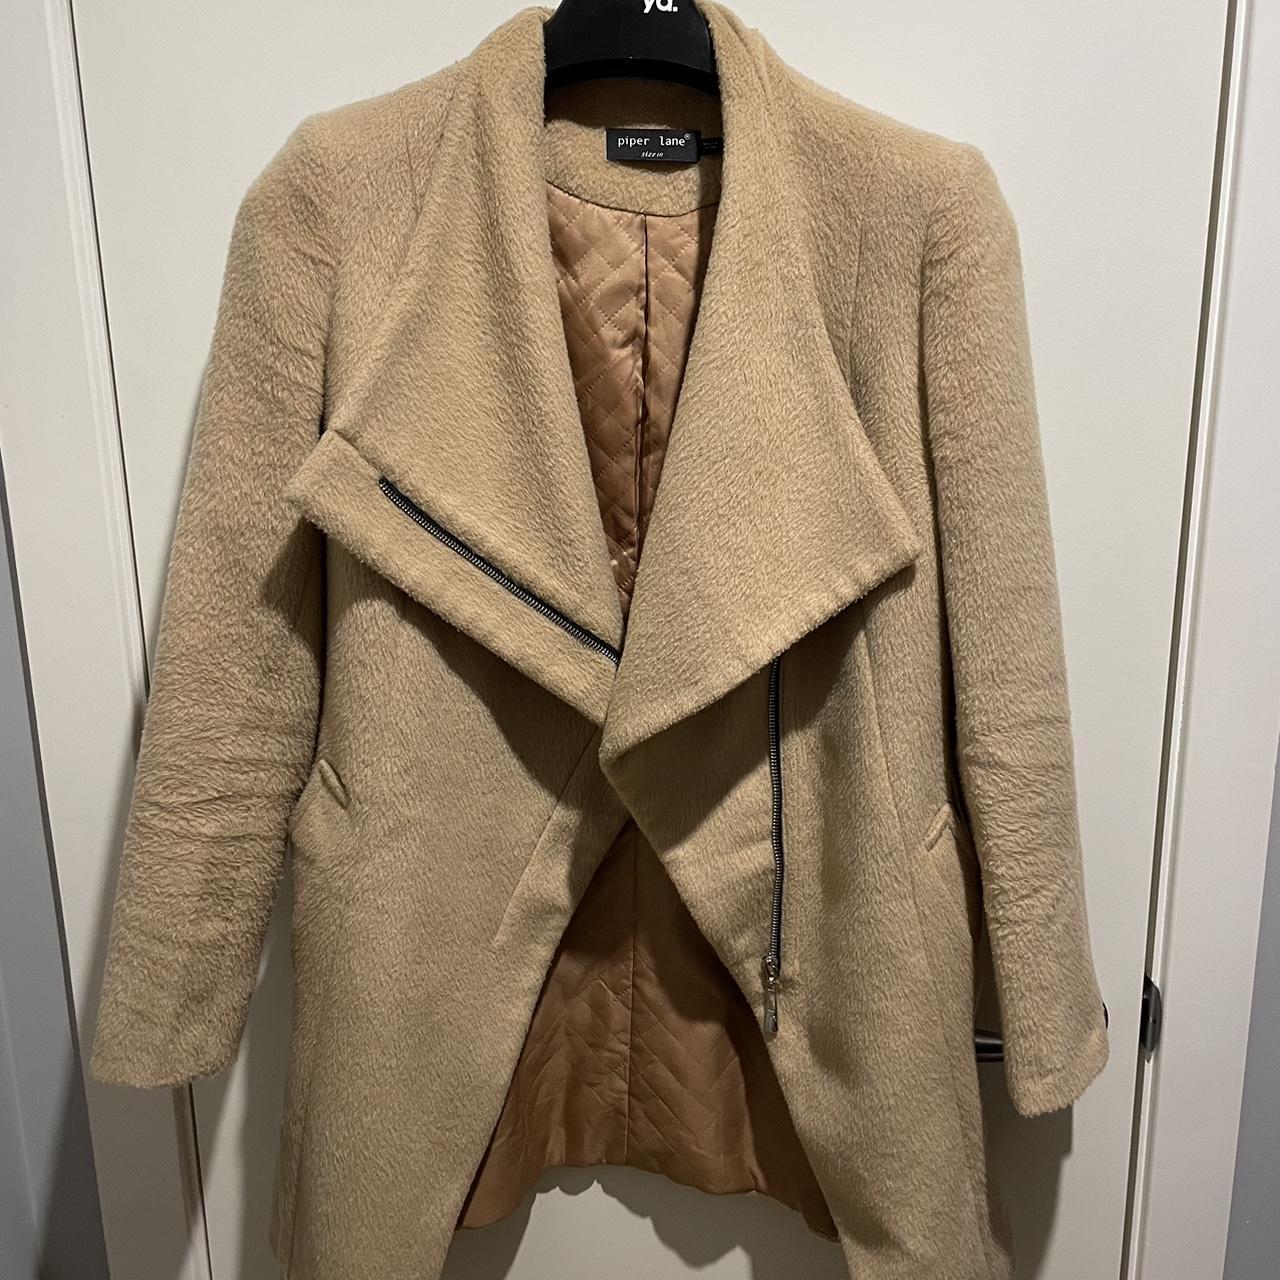 Piper Lane - Tan winter coat. Perfect for work wear... - Depop